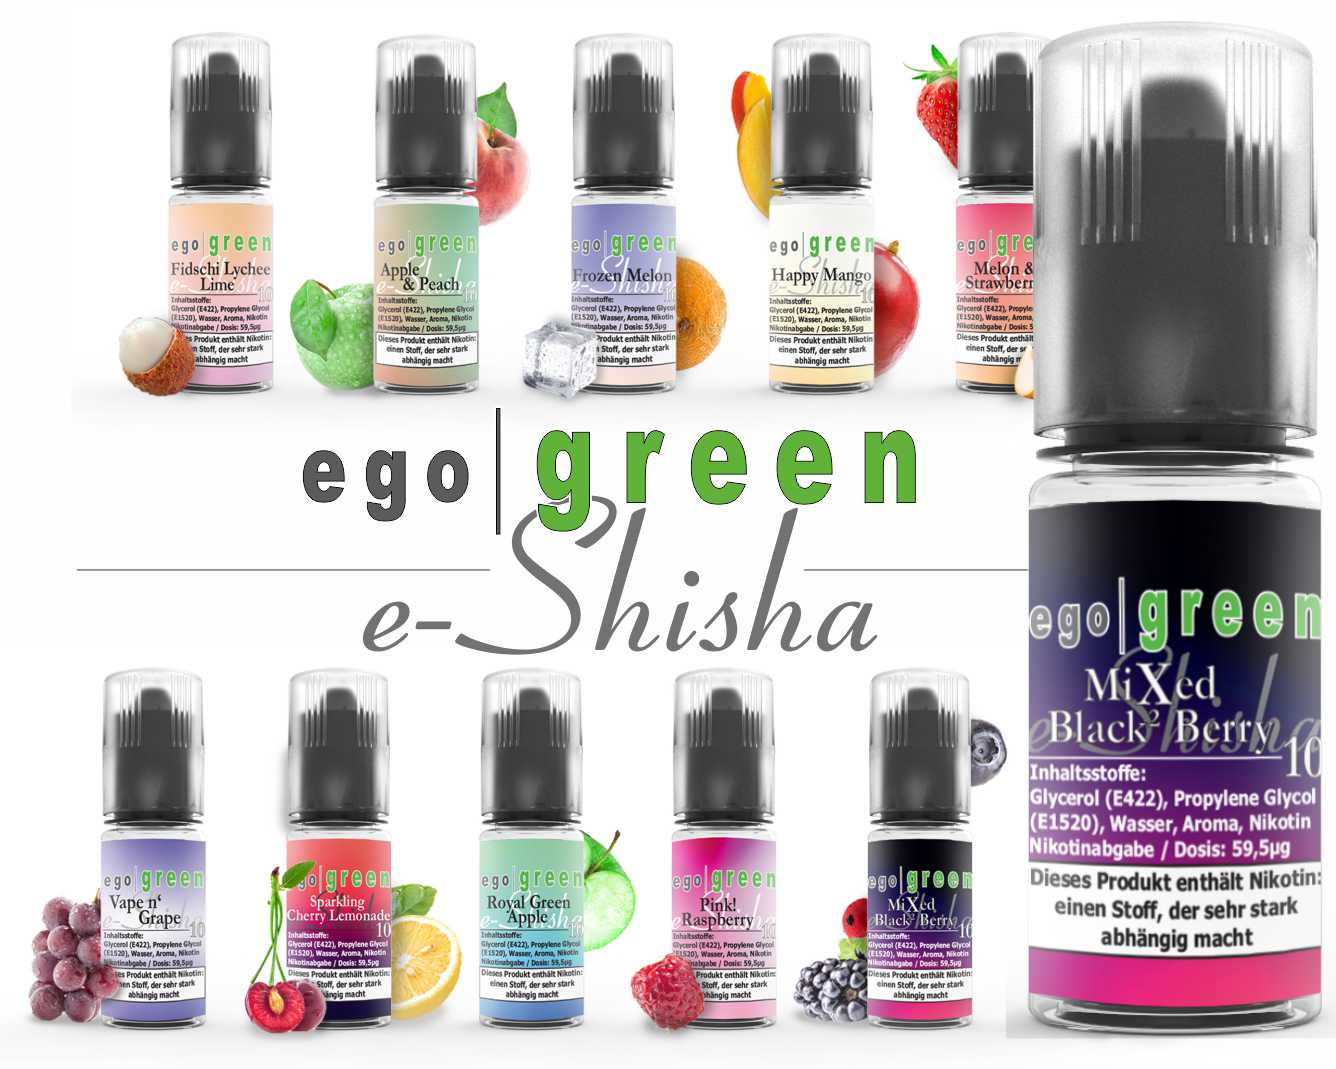 egogreen Mixed Black Berry Nikotinsalz e-Shisha Liquid kaufen